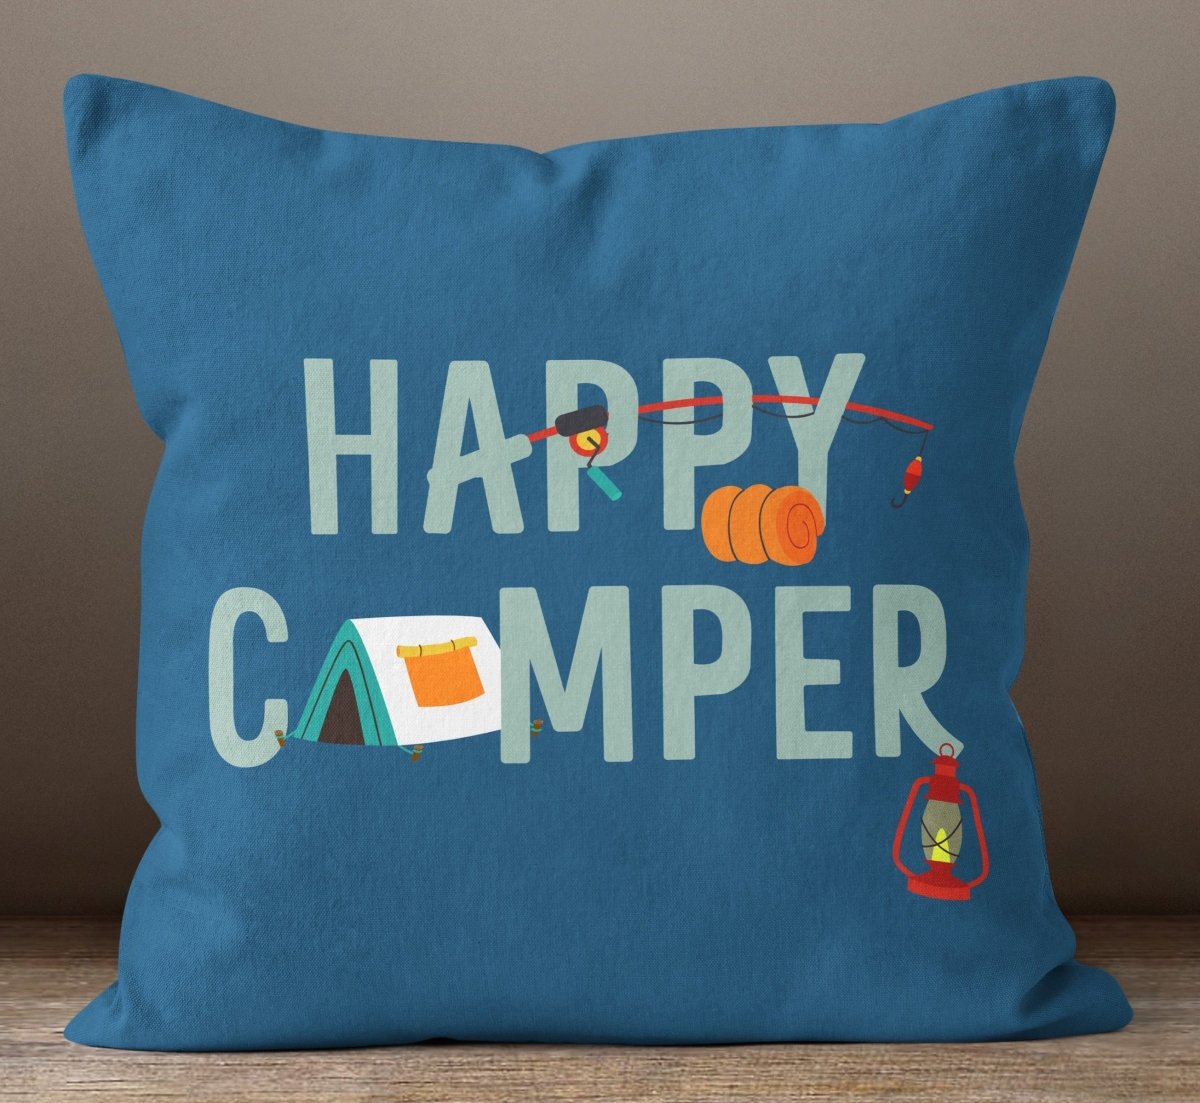 Happy Camper Nursery Starter Set - gender_boy, Happy Camper, text